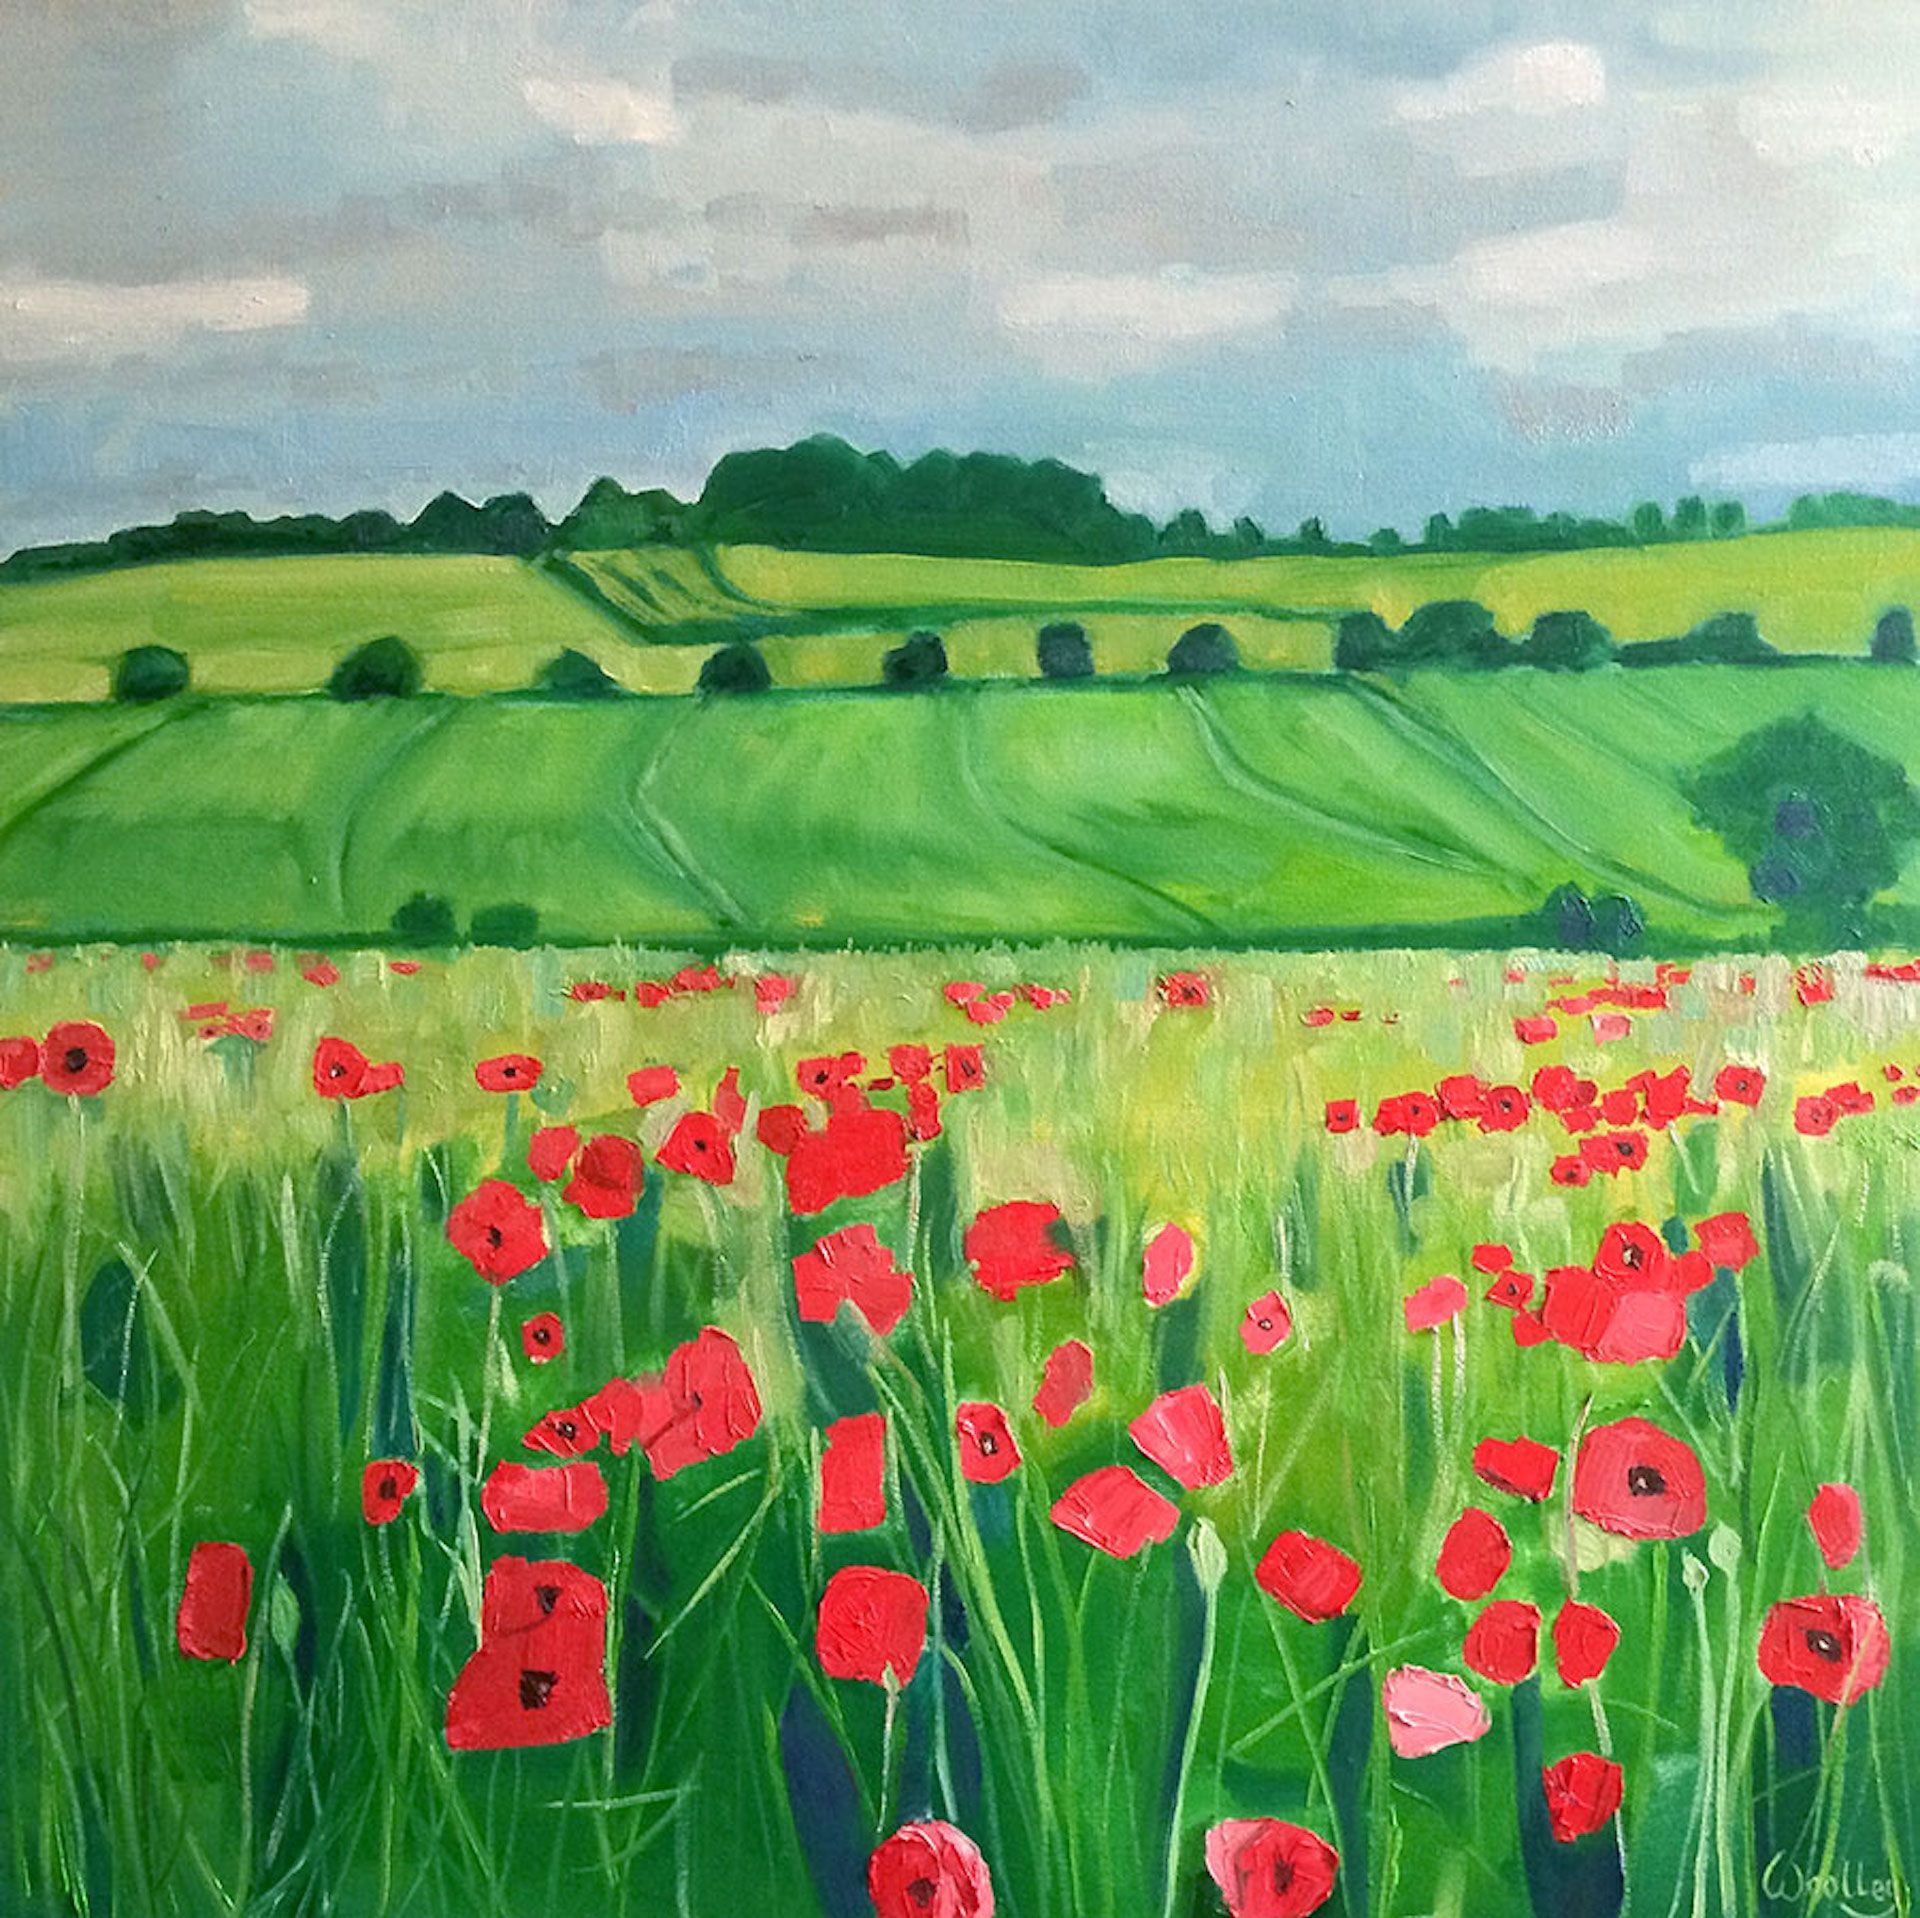 Polka Dot Poppies by Eleanor Woolley